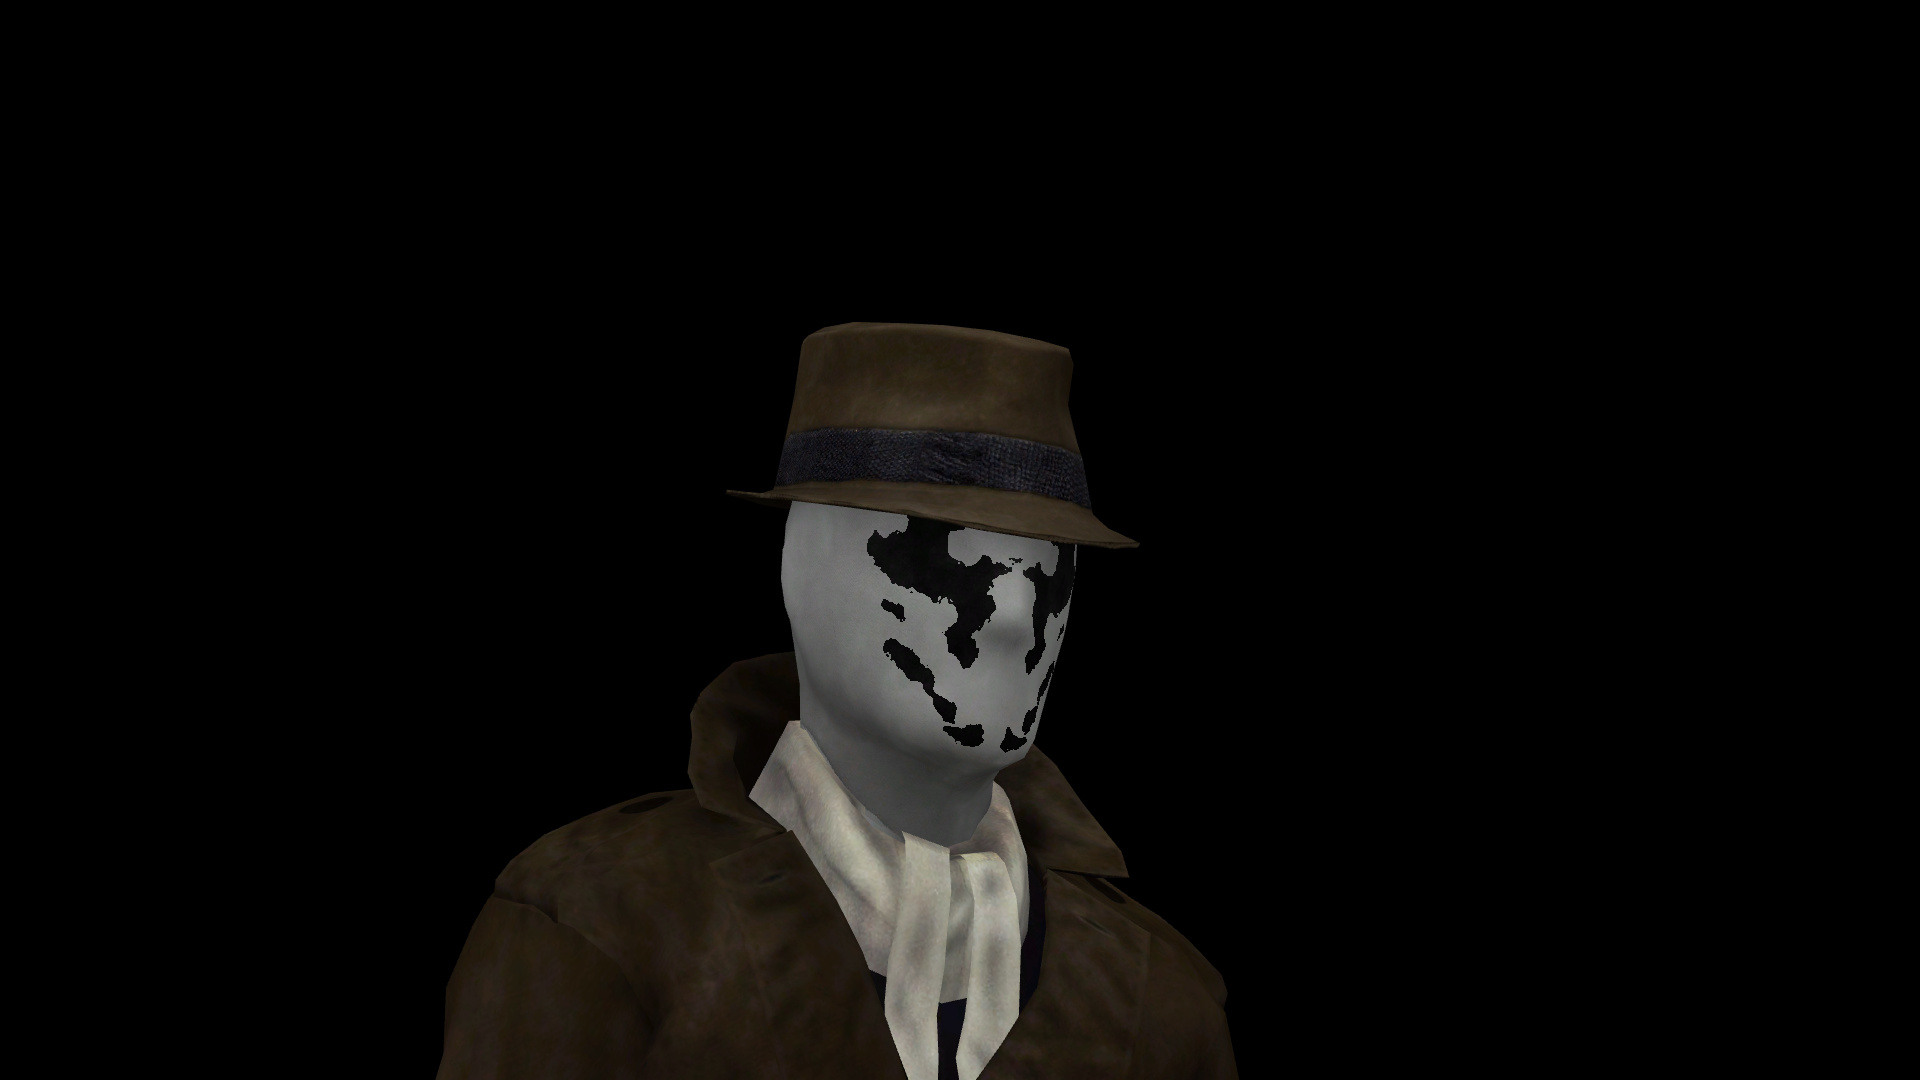 Rorschach (character) - Wikipedia